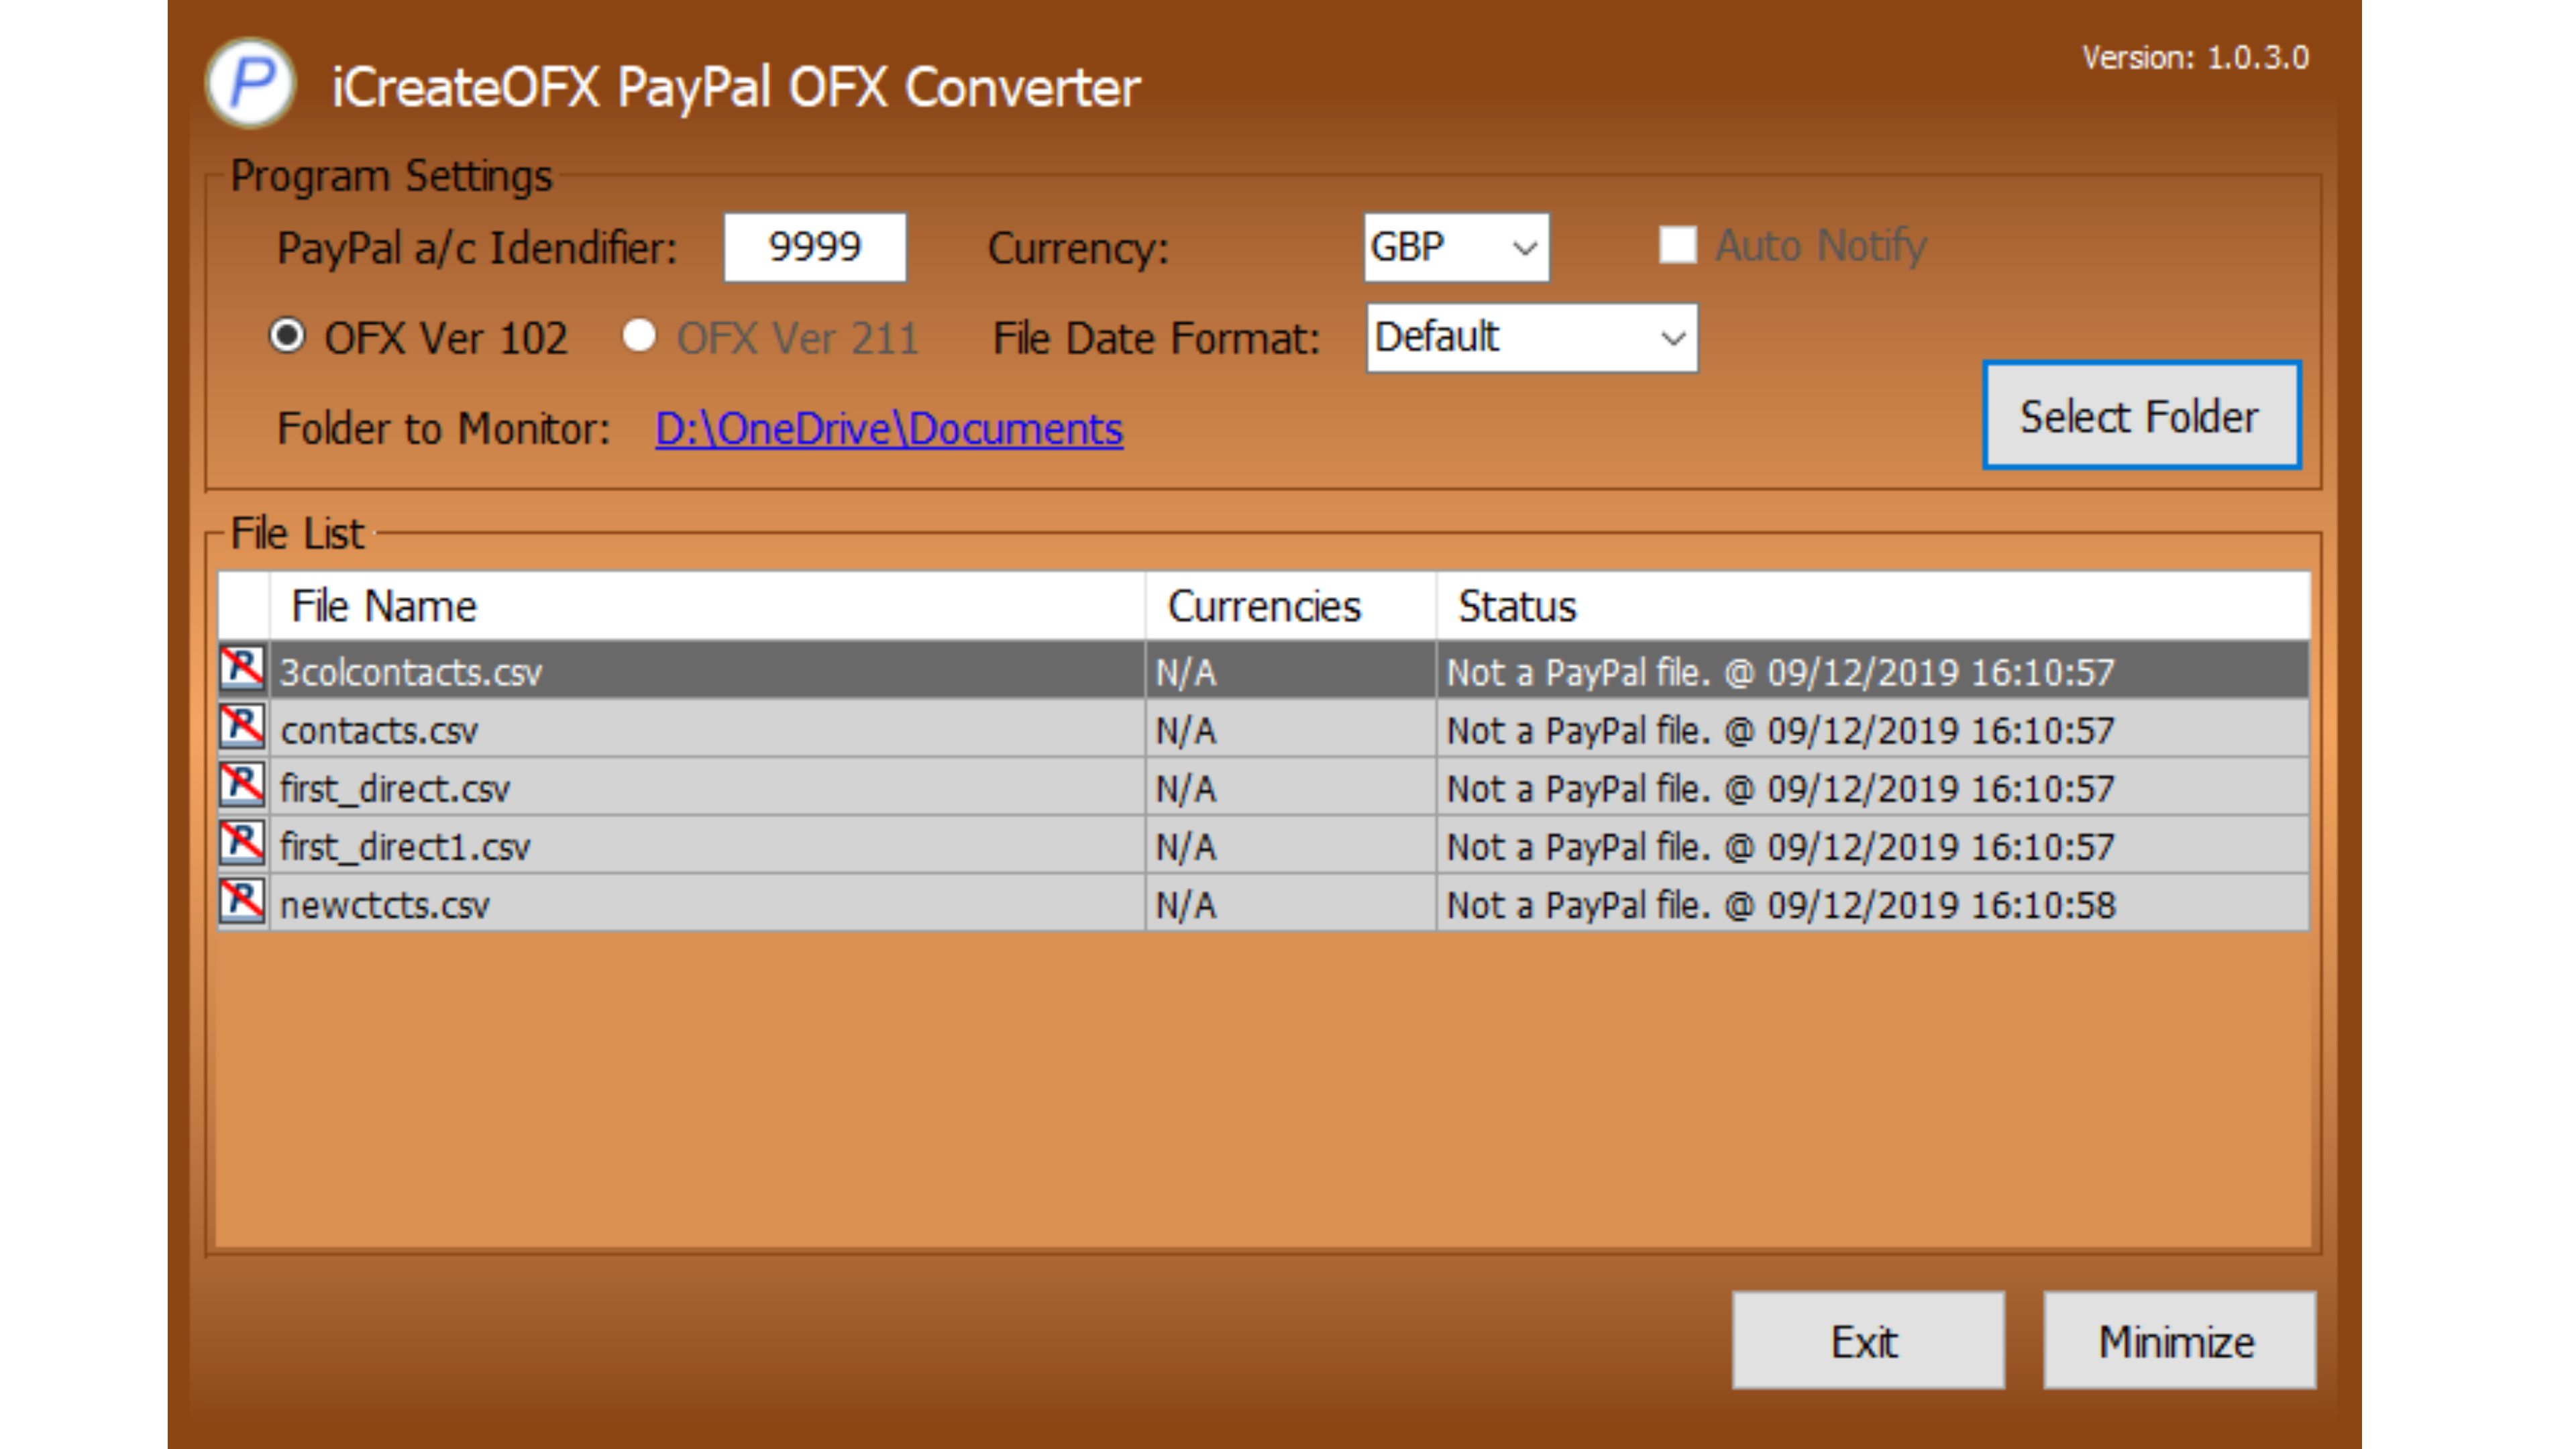 iCreateOFX PayPal OFX